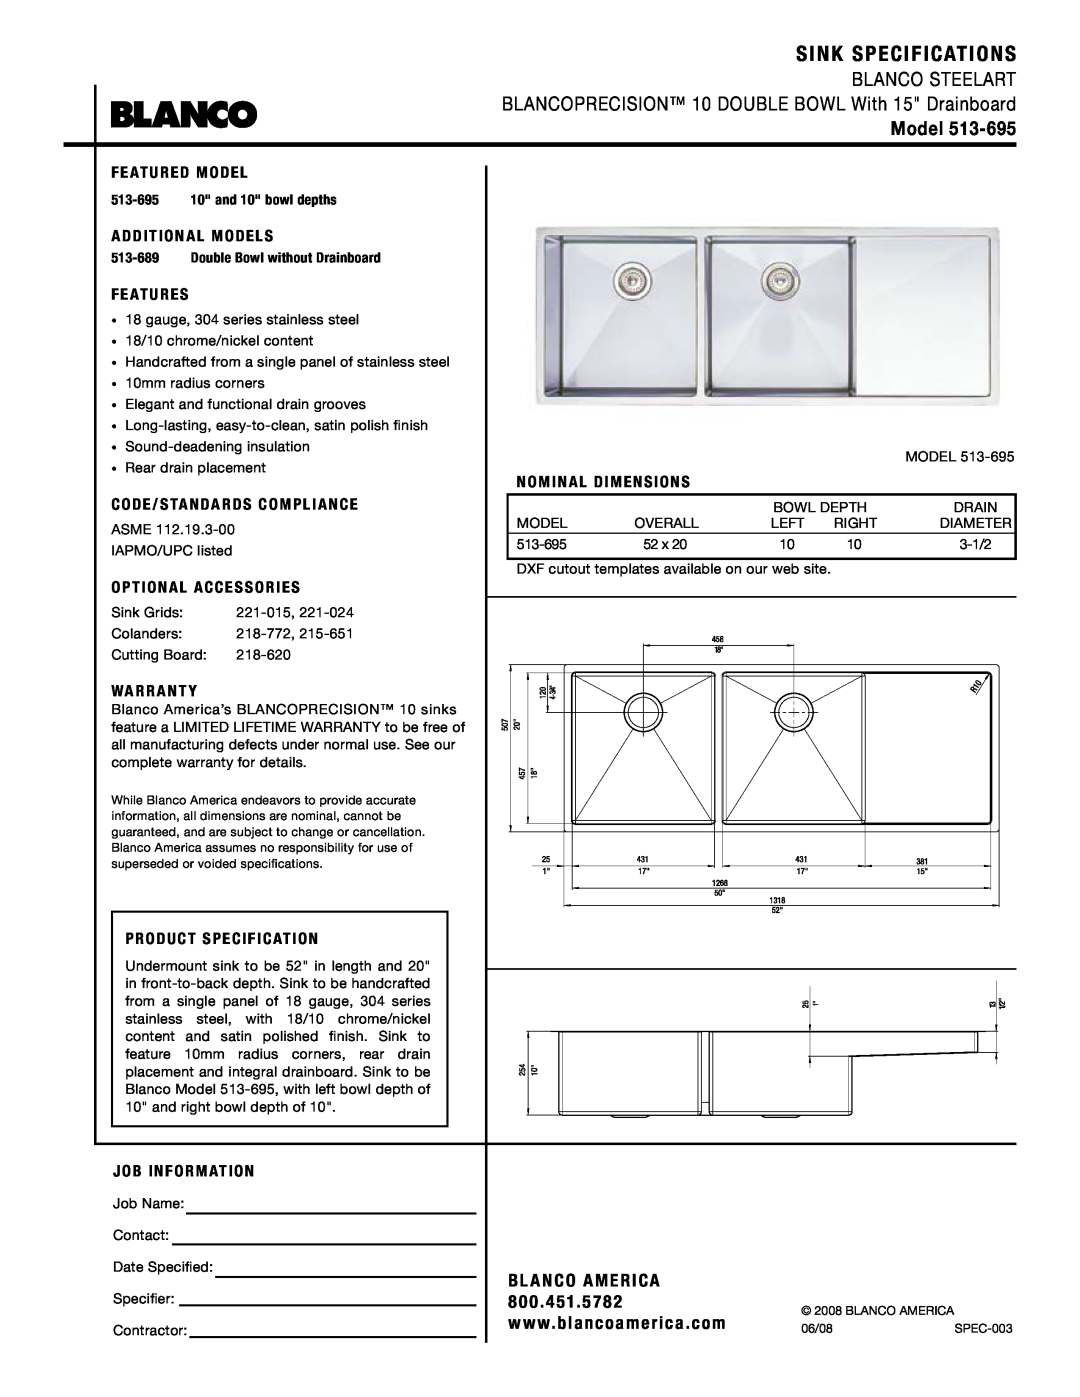 Blanco 513-695 warranty Sink Specifications, Blanco Steelart, BLANCOPRECISION 10 DOUBLE BOWL With 15 Drainboard, Model 